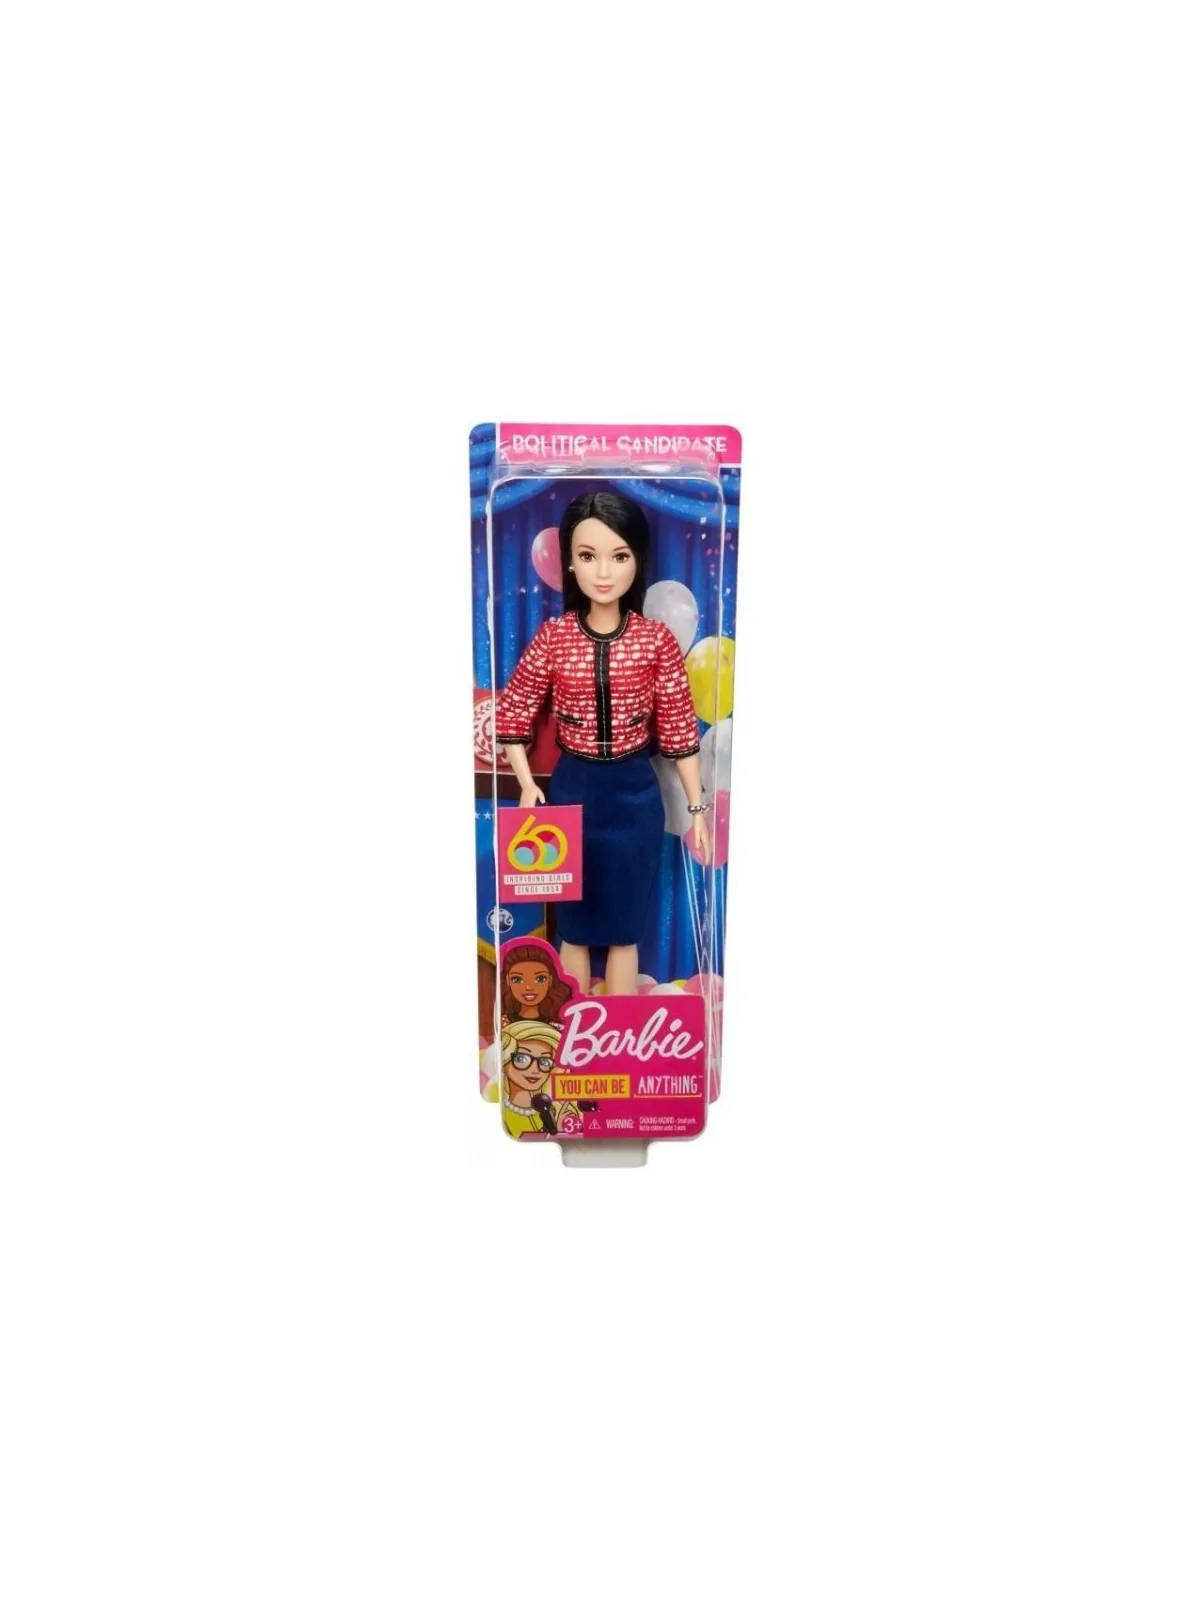 Barbie Presidential Canditate 9x31 cm